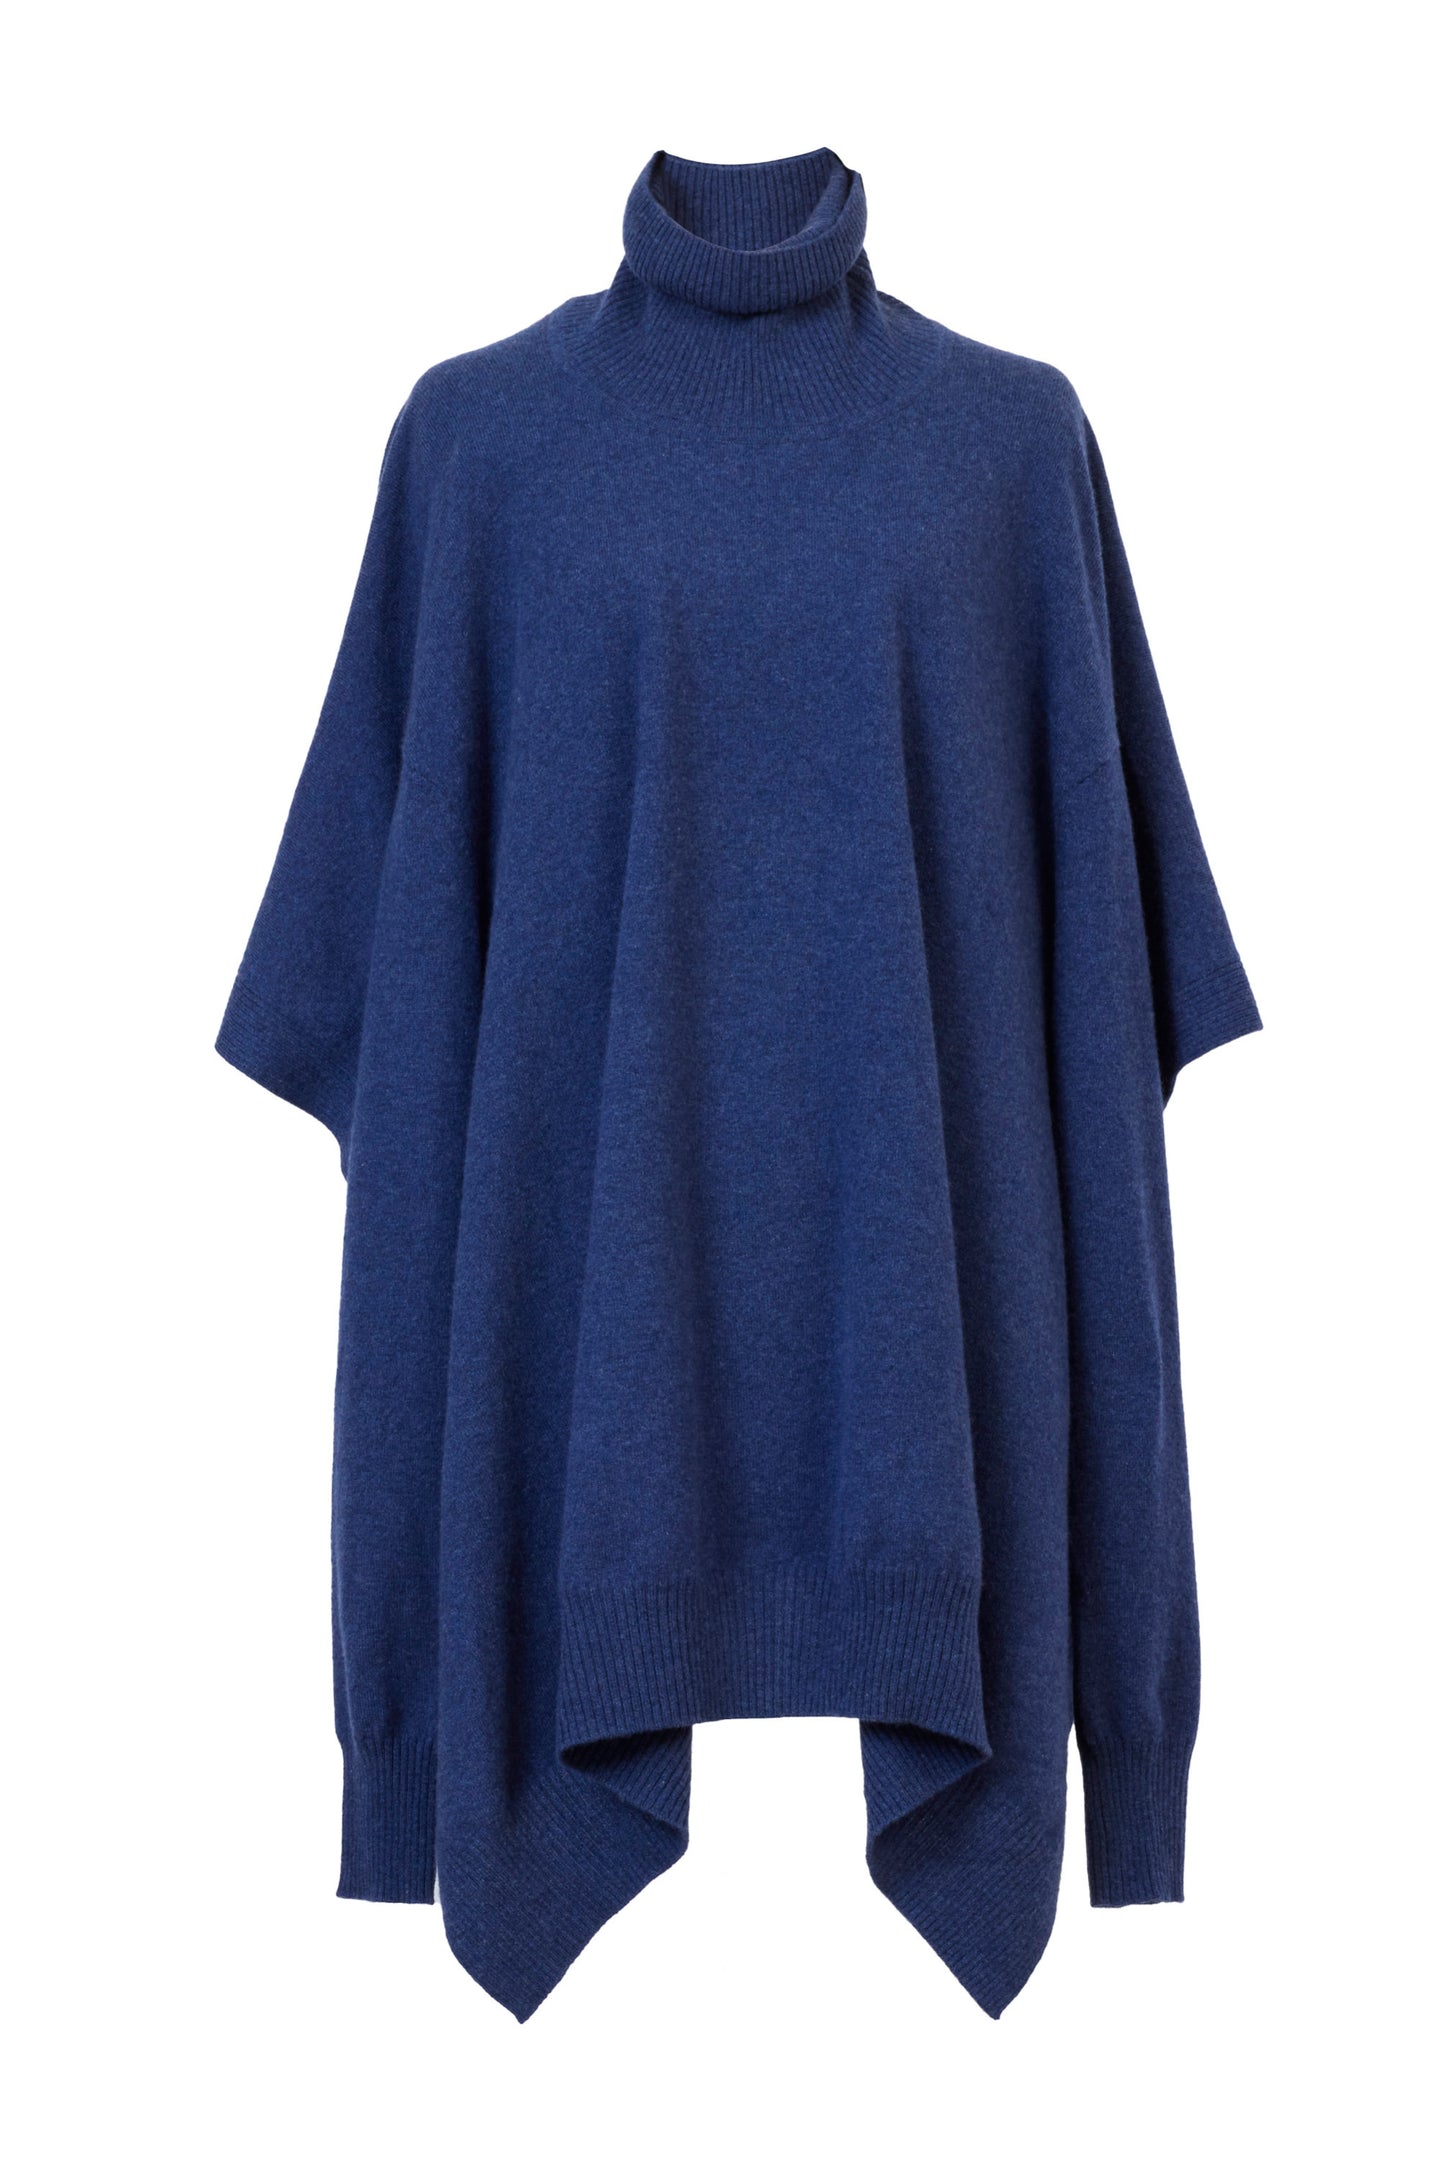 Cashmere Knit Poncho Top | Indigo – MYLAN ONLINE SHOP